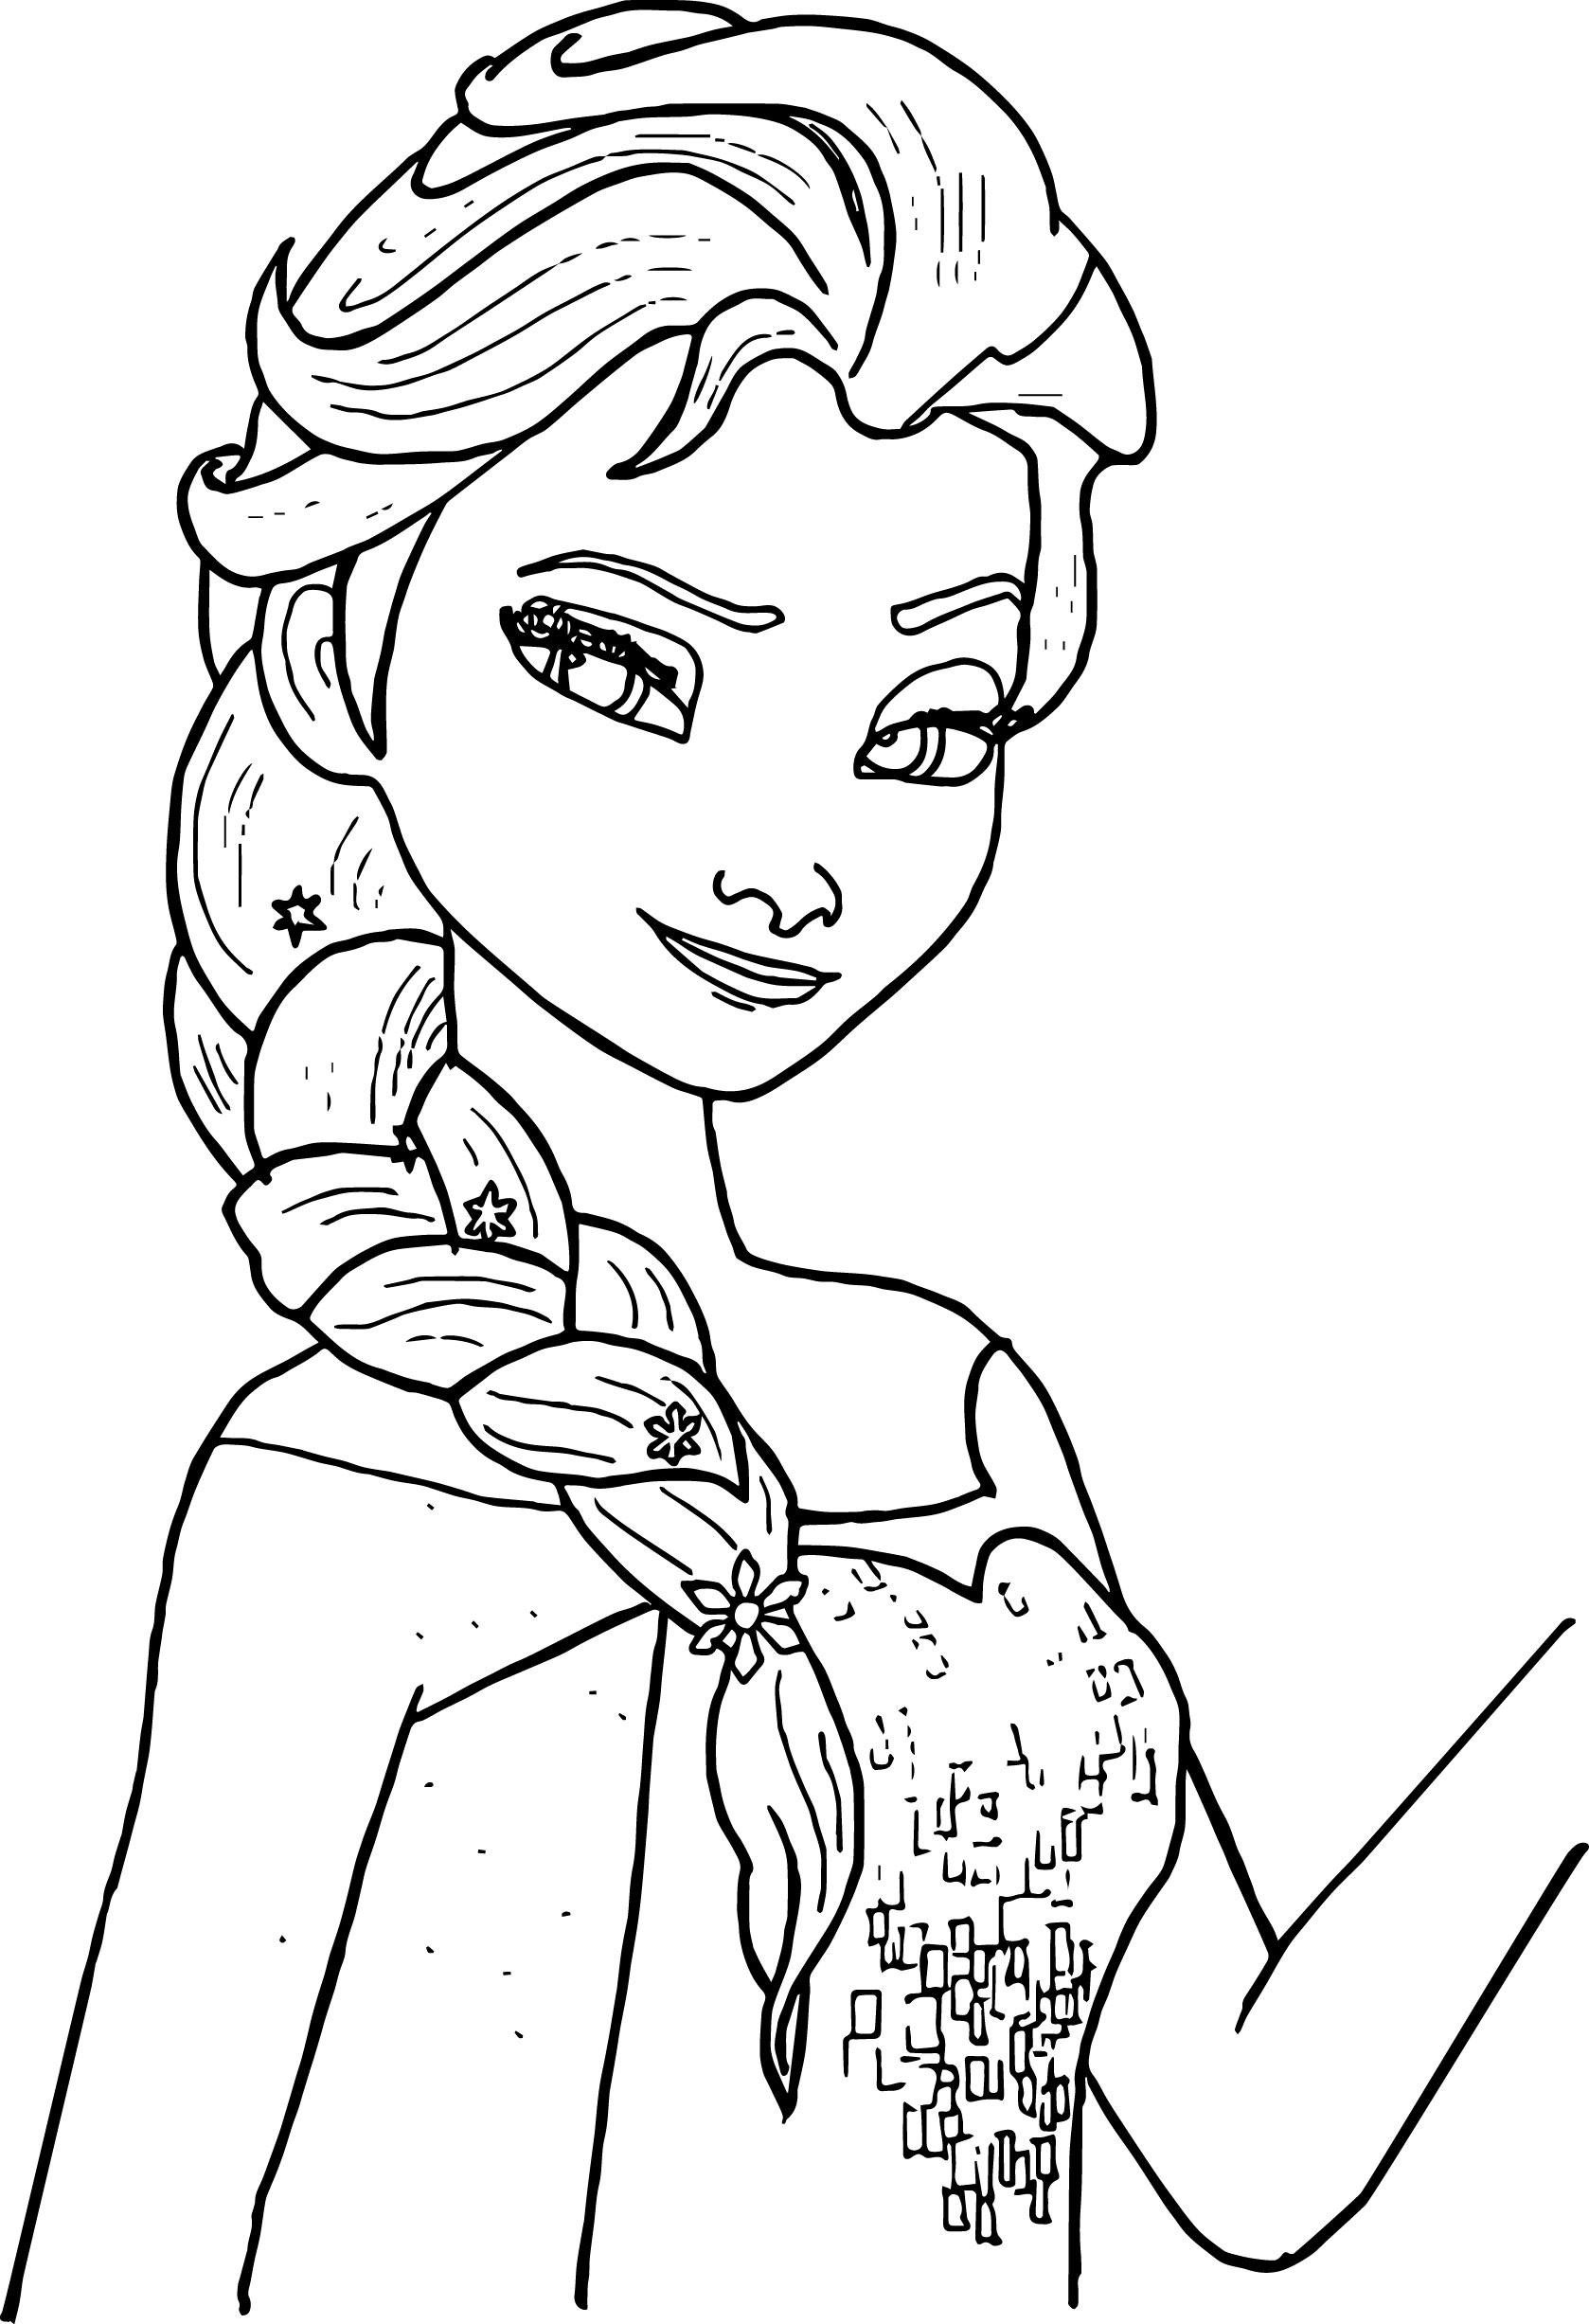 Princess Elsa Coloring Pages at GetColorings.com | Free ...